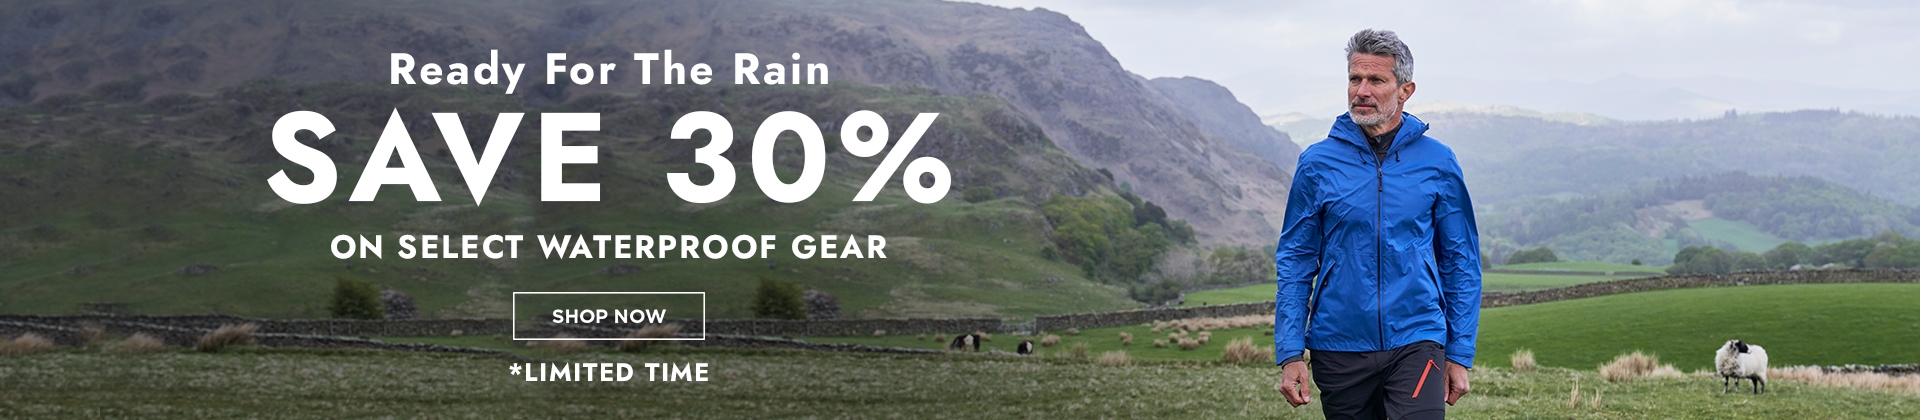 H1:Save 30% On Select Waterproof Gear